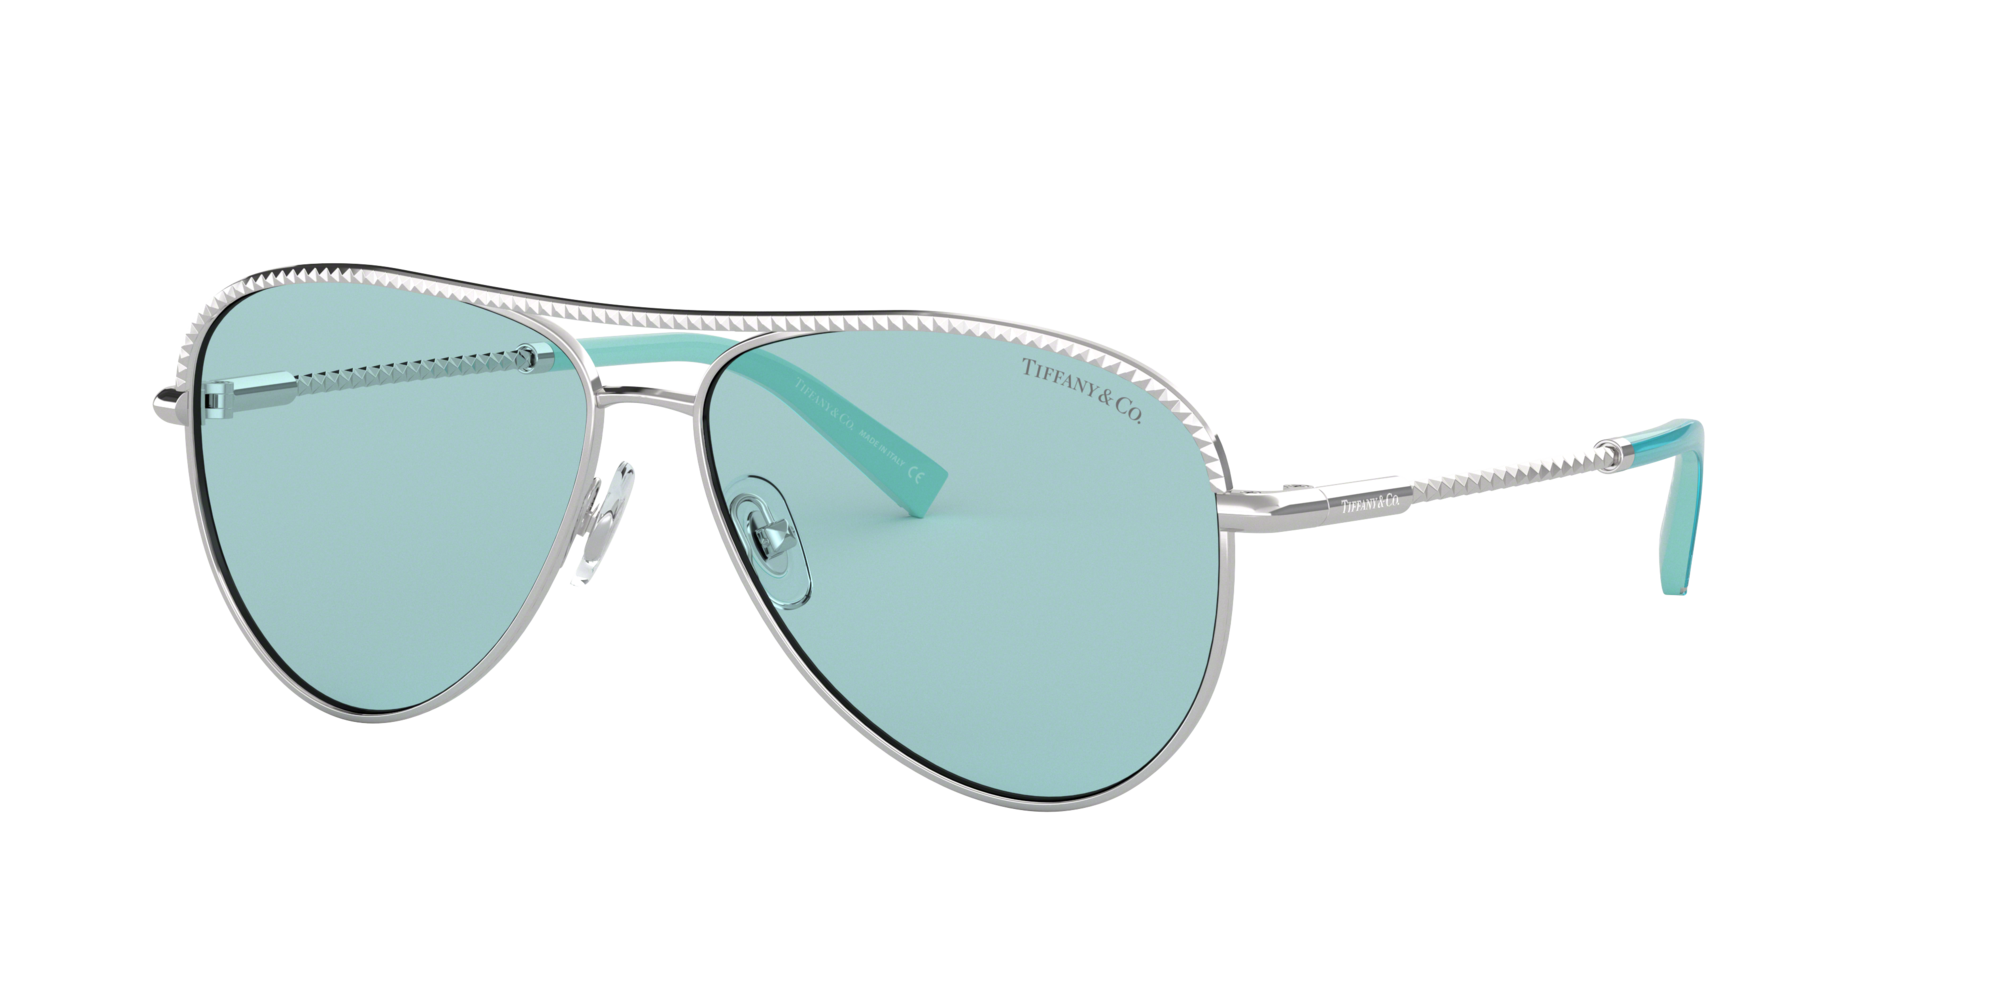 tiffany sunglasses with diamonds